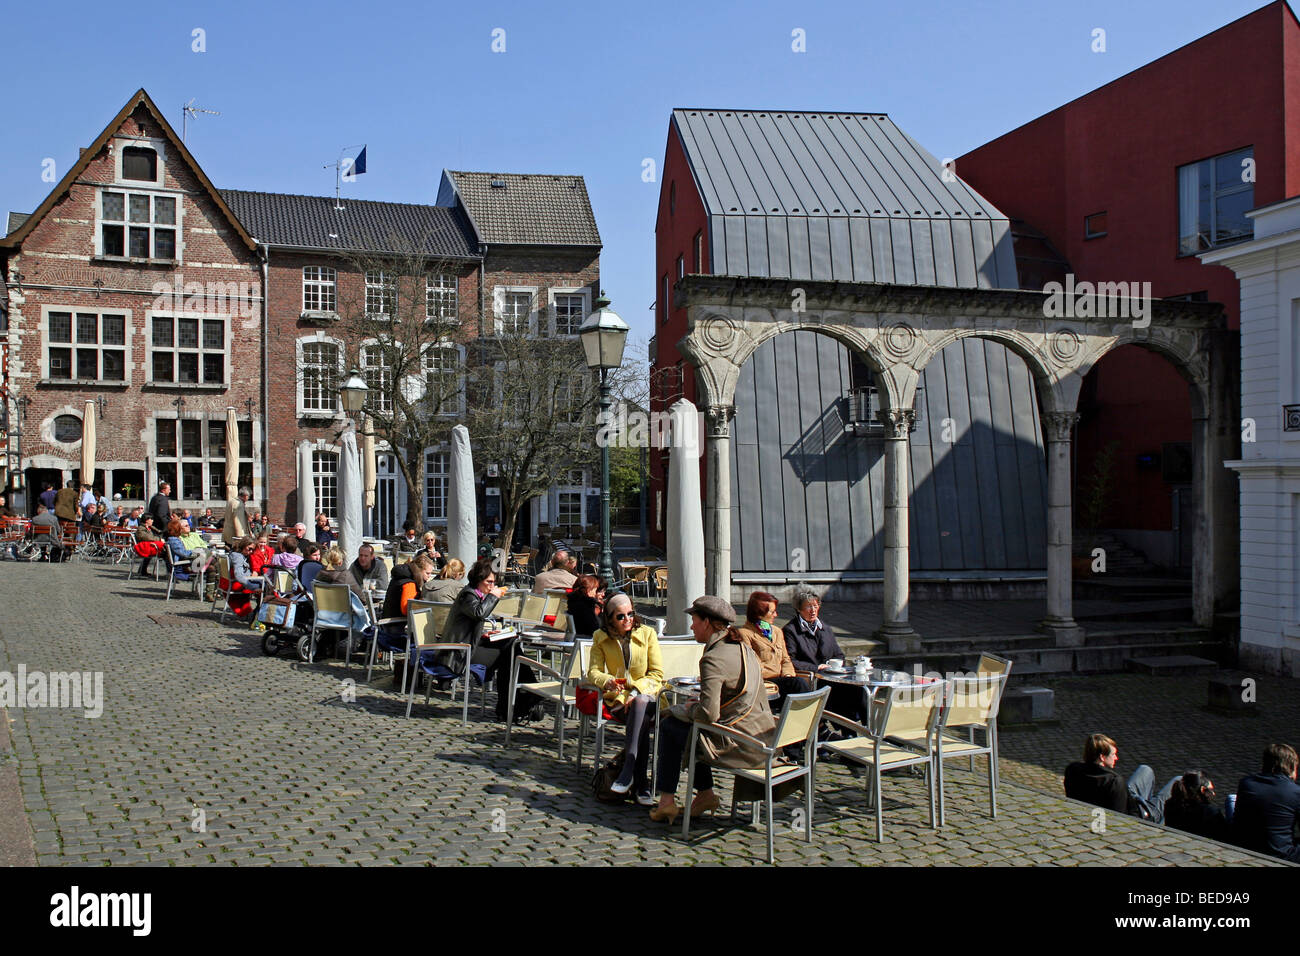 Historic building in the historic centre, Im Hof, Aachen, North Rhine-Westphalia, Germany, Europe Stock Photo